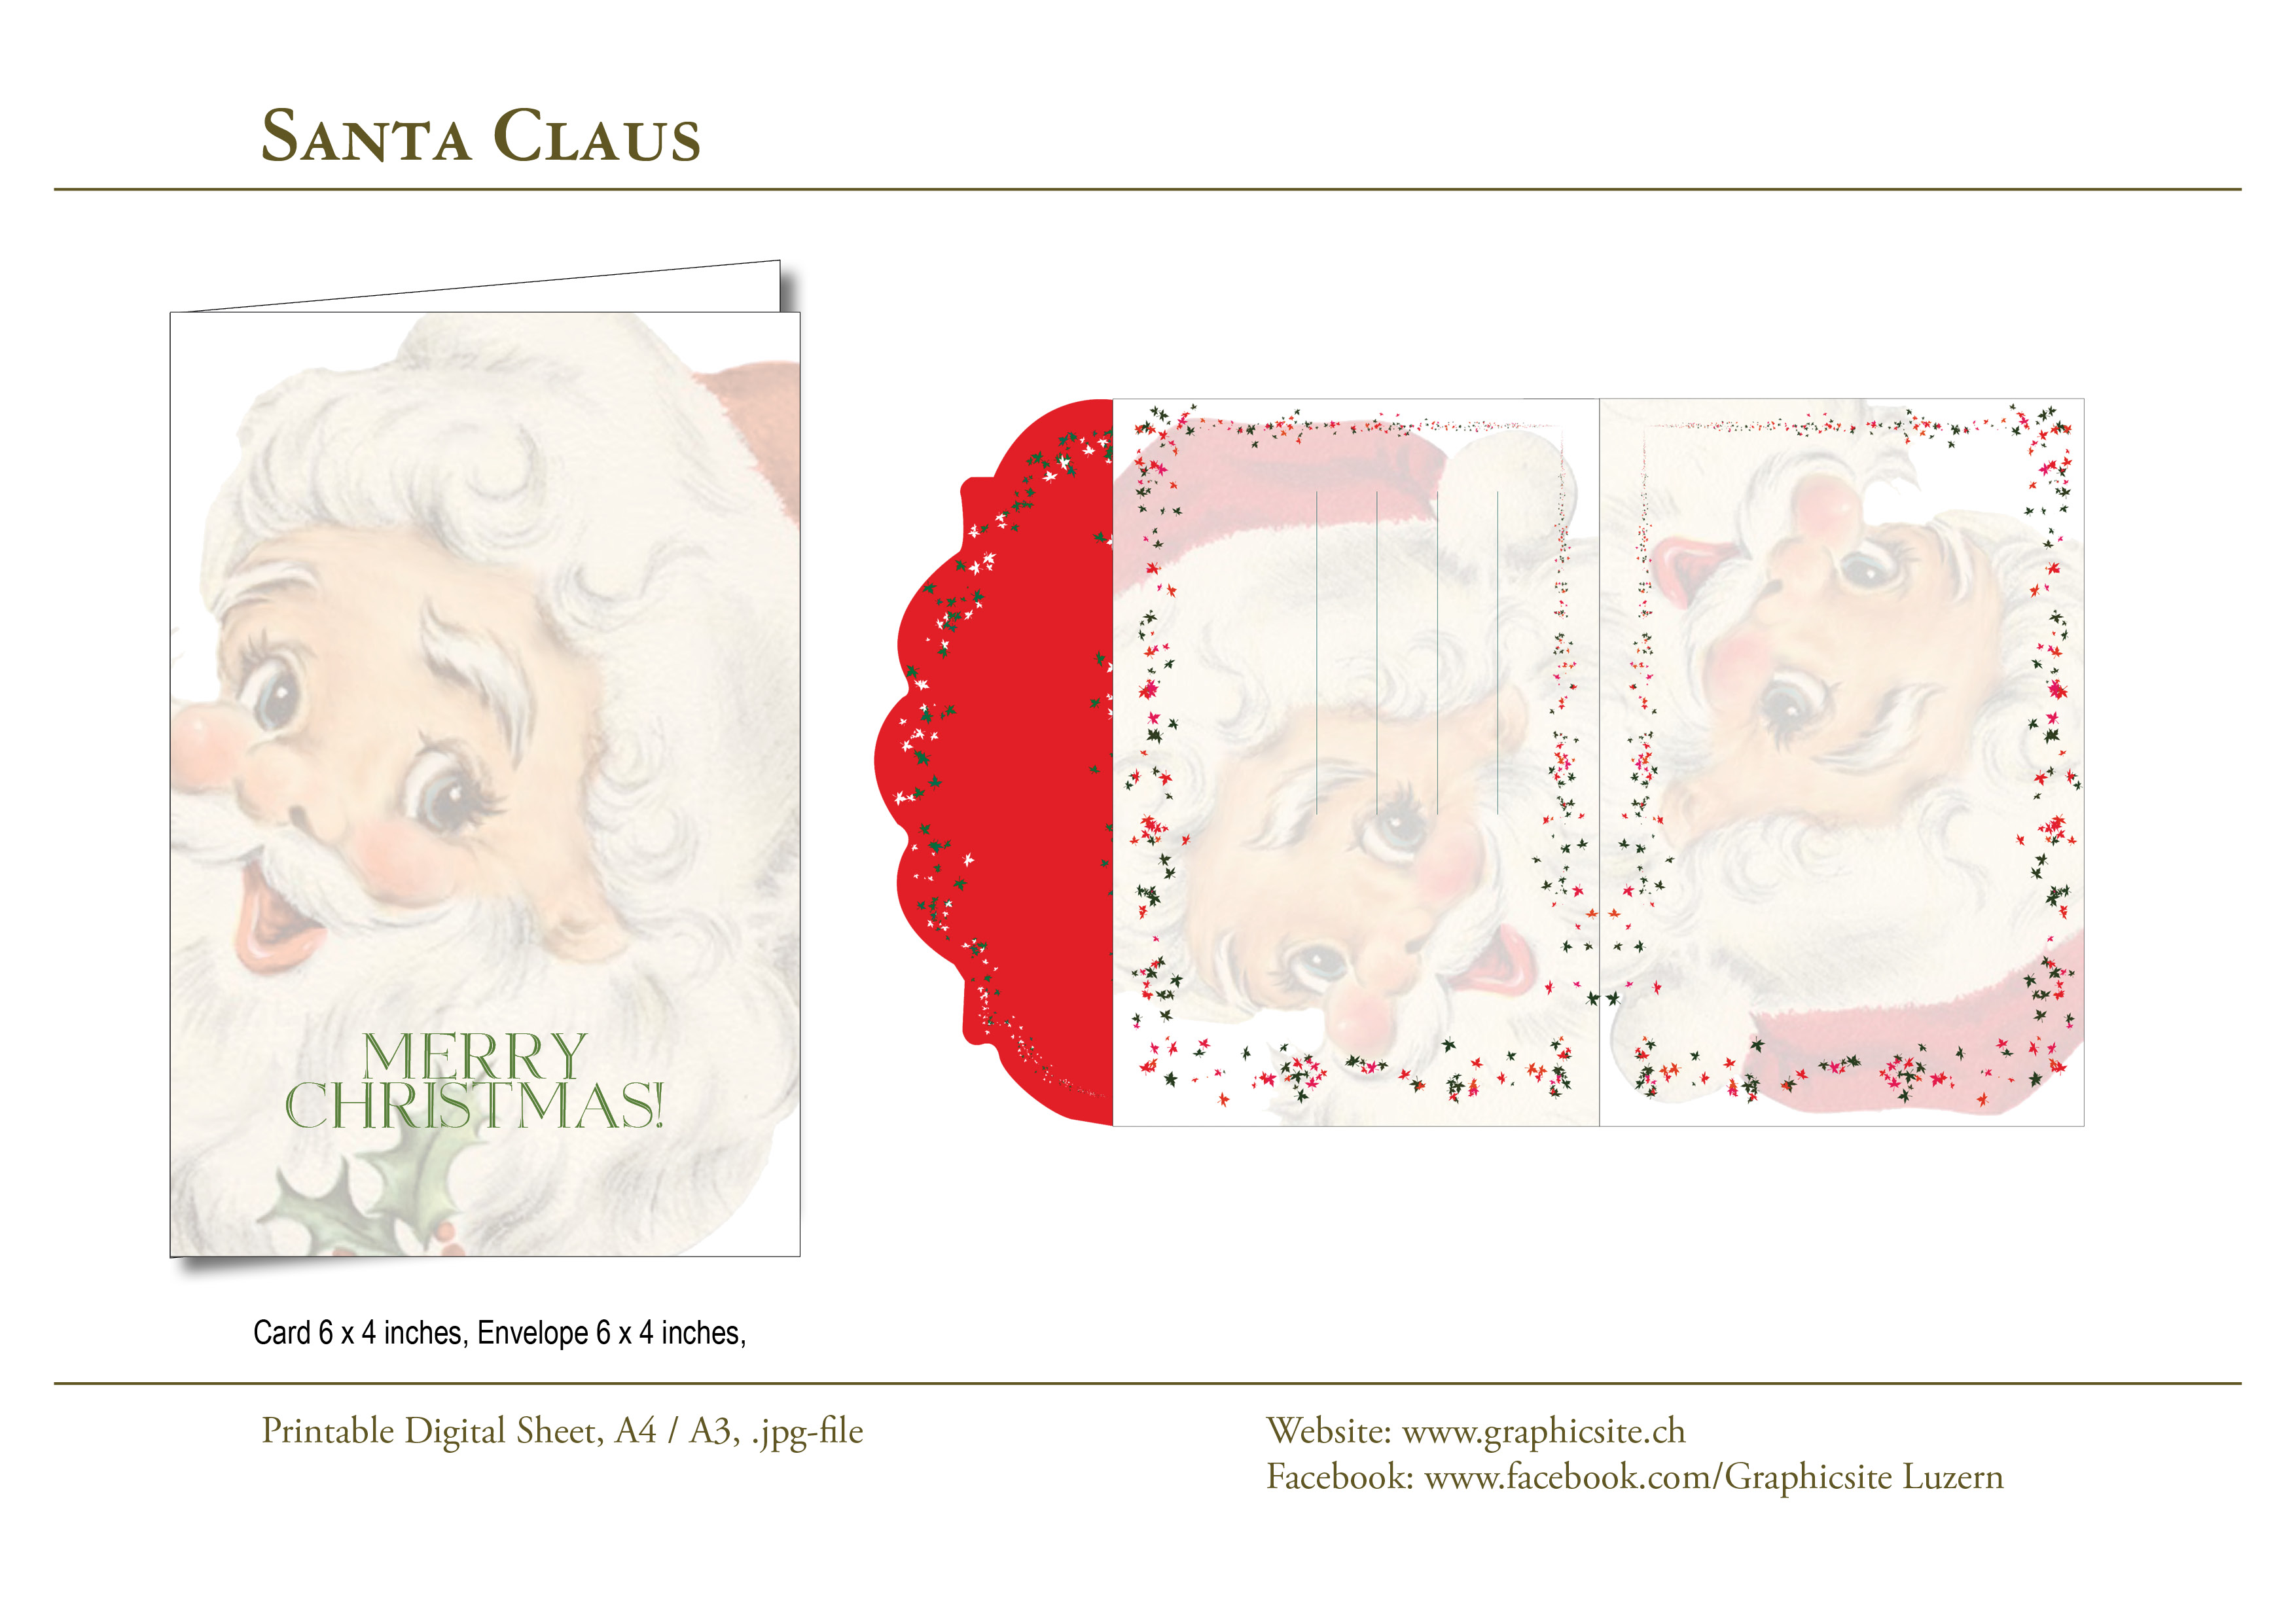 Printable Digital Sheets - Christmas - Santa Claus Cardset - #christmas, #printable, #digital, #sheets, #santaclaus, #greetingcards, #envelope,